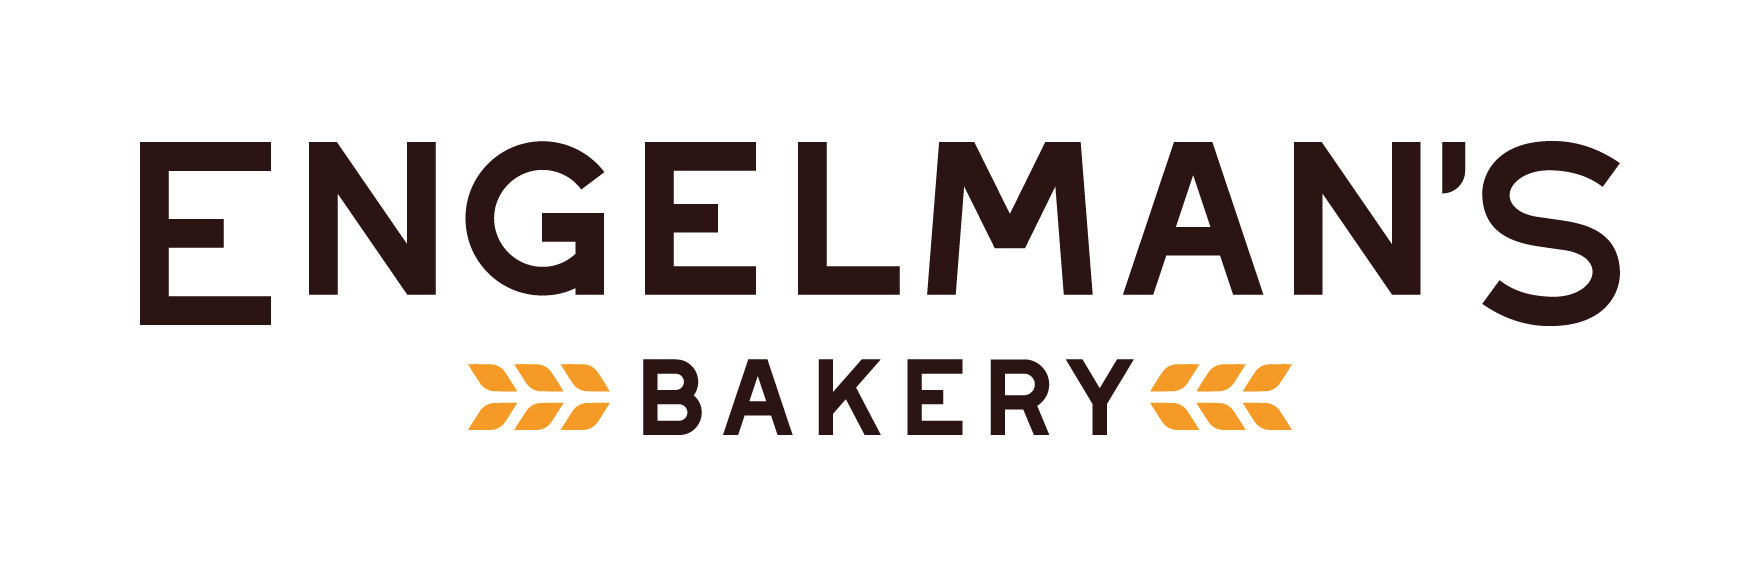 Engelman's Bakery Inc